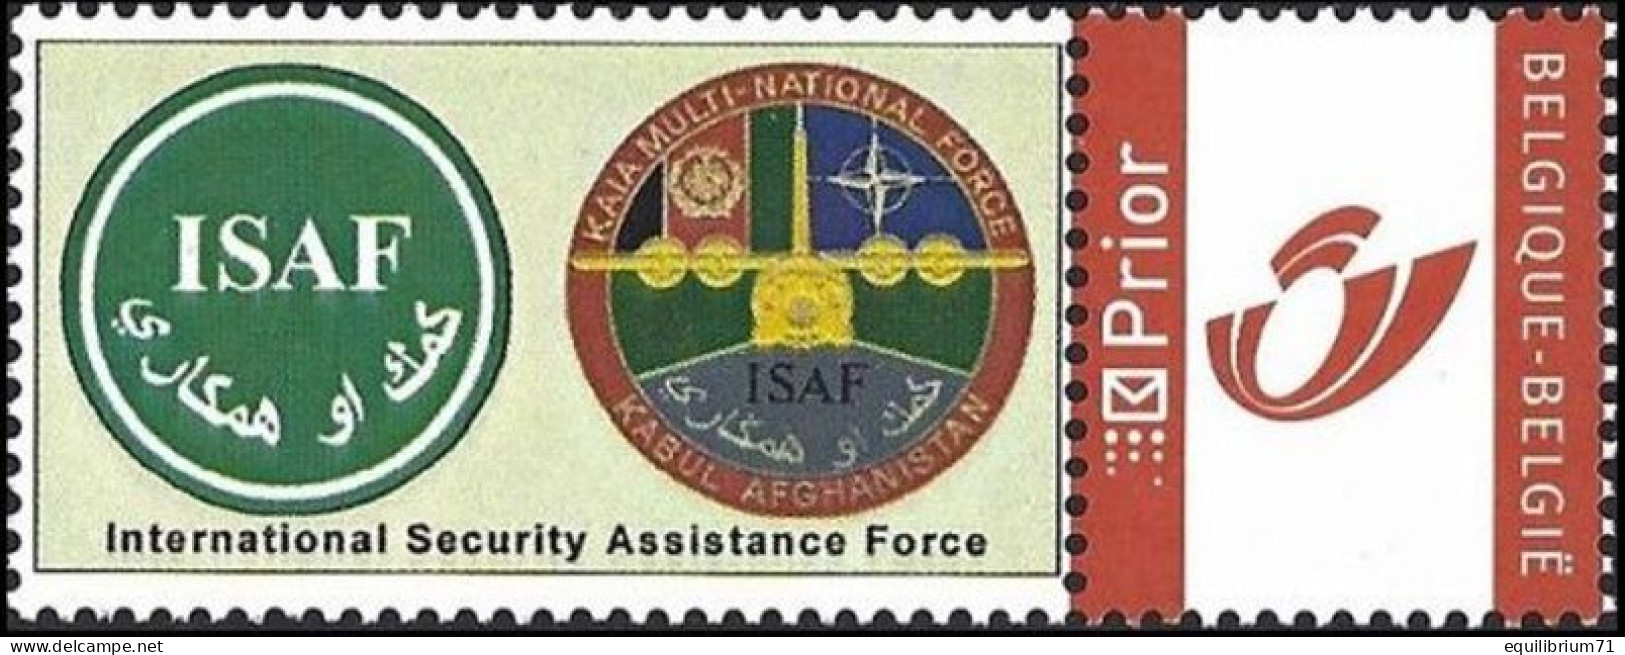 DUOSTAMP** / MYSTAMP** - International Security Assistance Force - ISAF - Kabul Afghanistan - Mint